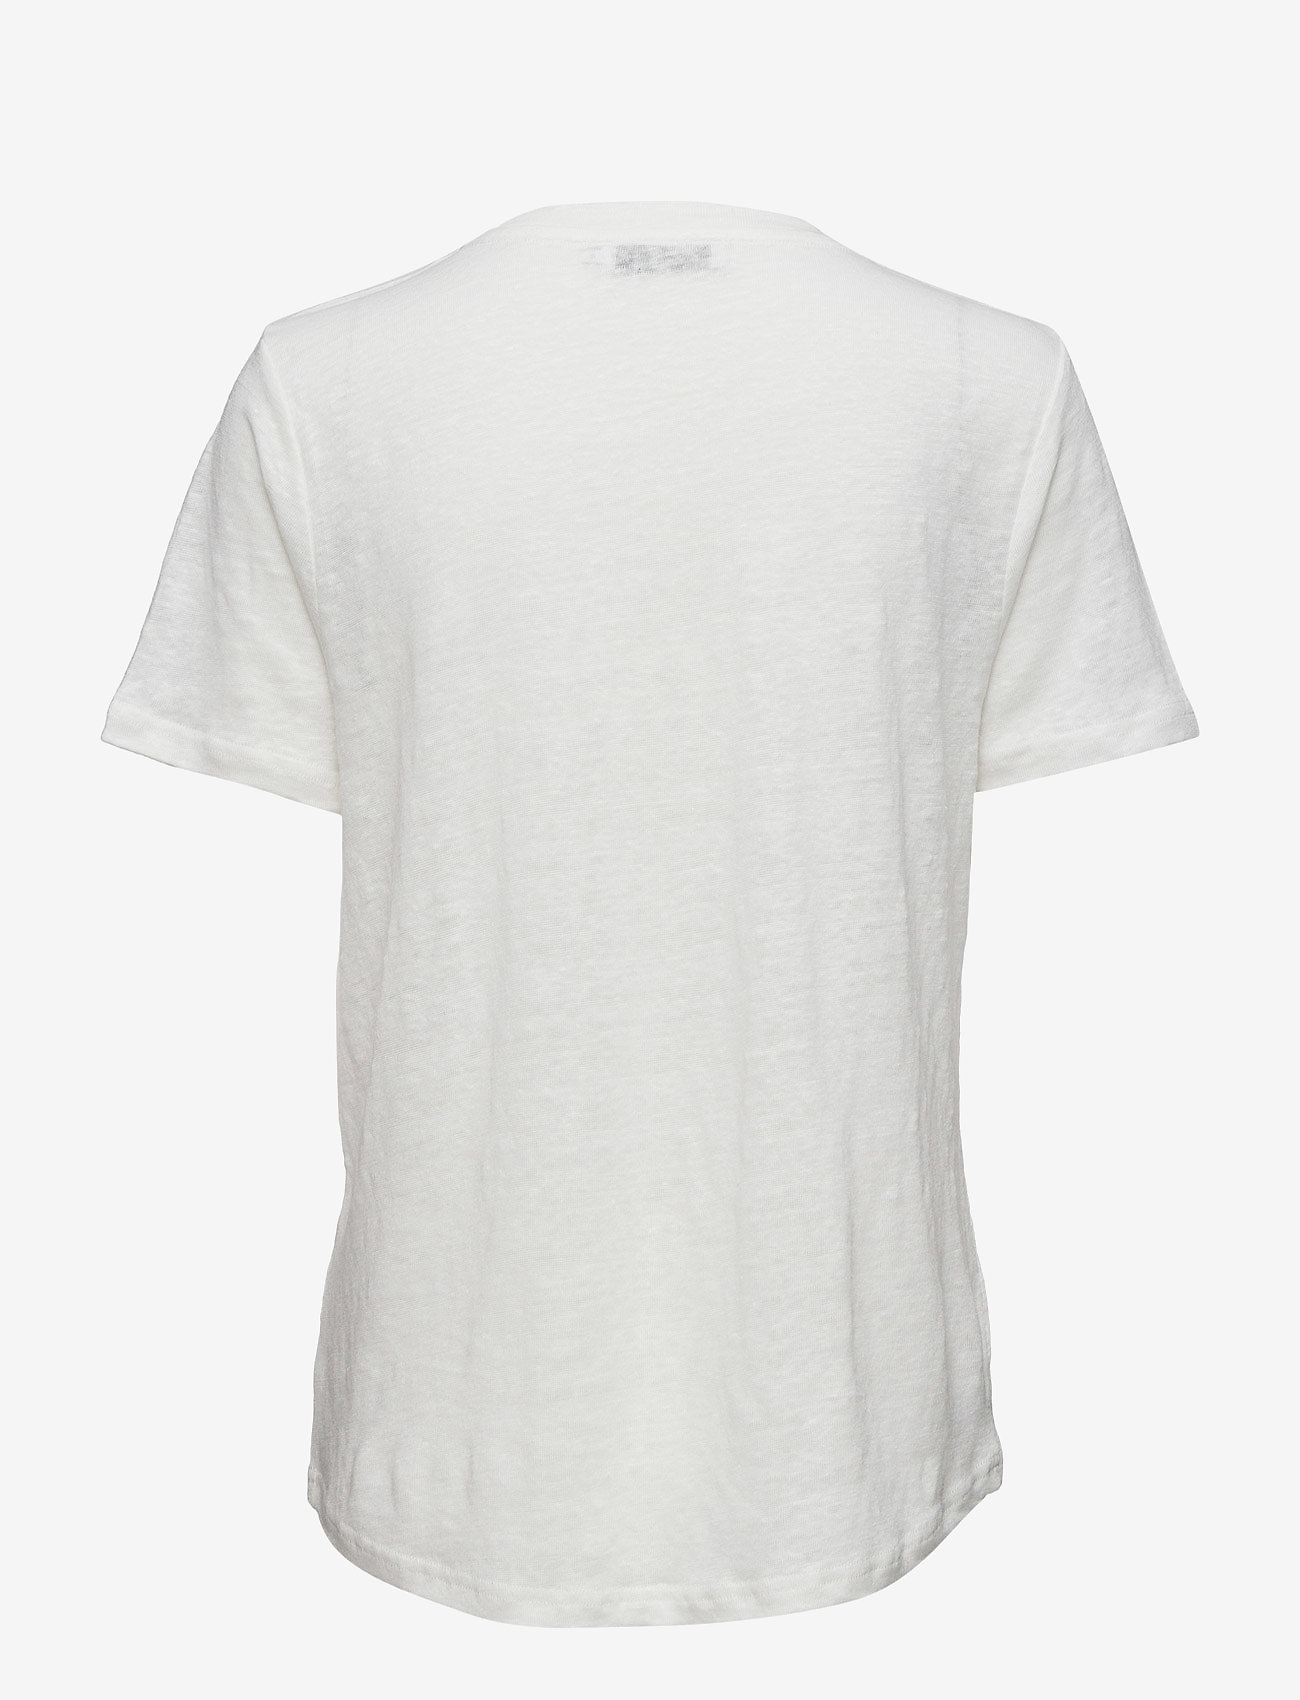 Samsøe Samsøe - Agnes tee 6680 - t-shirts - clear cream - 1